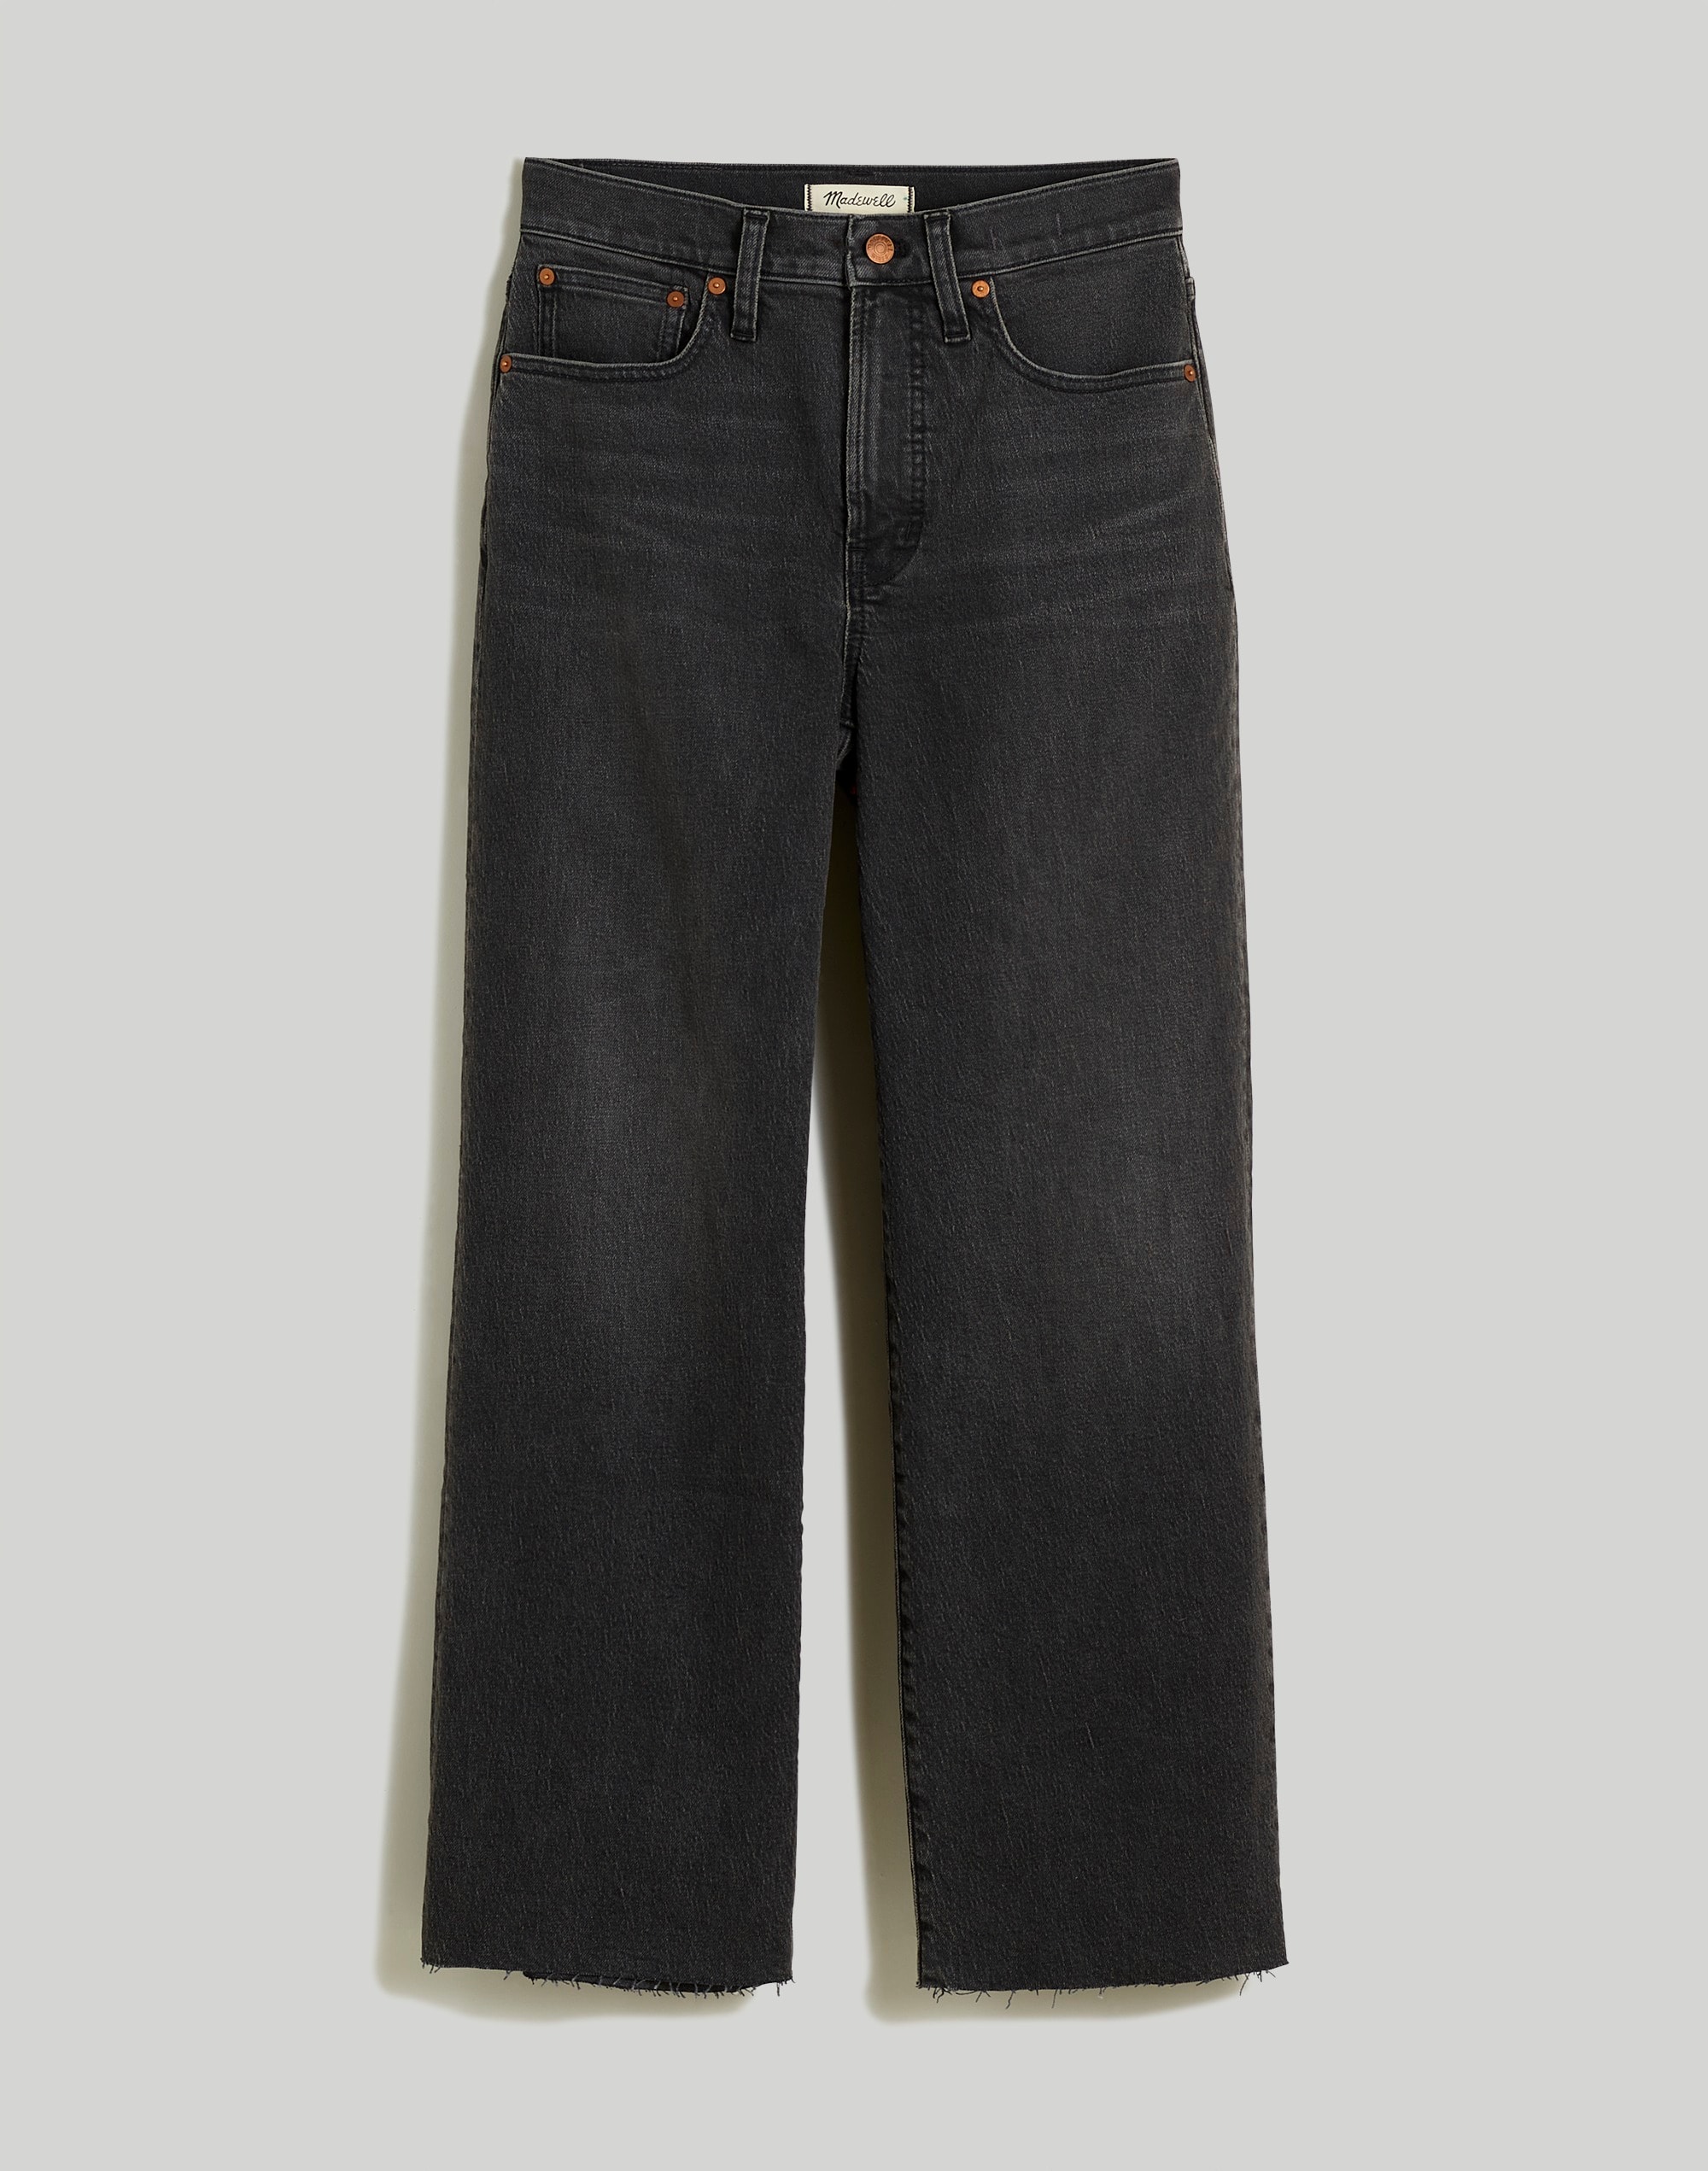 The Plus Perfect Vintage Wide-Leg Crop Jean in Benley Wash: Raw-Hem Edition